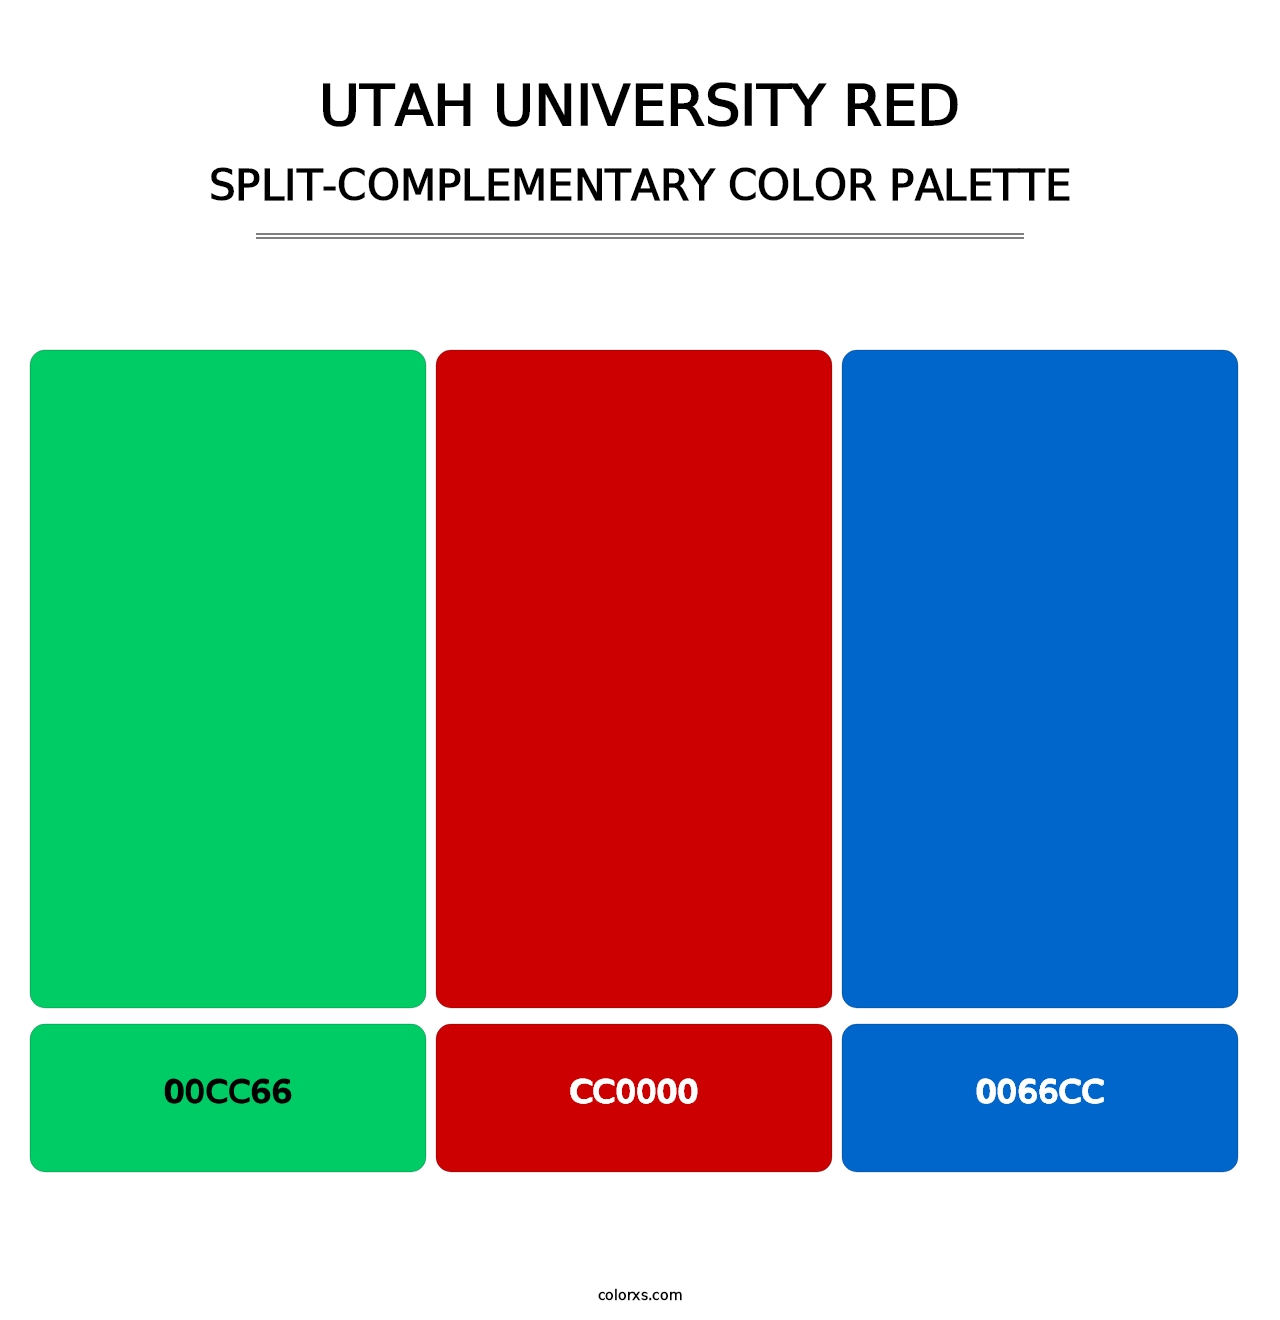 Utah University Red - Split-Complementary Color Palette